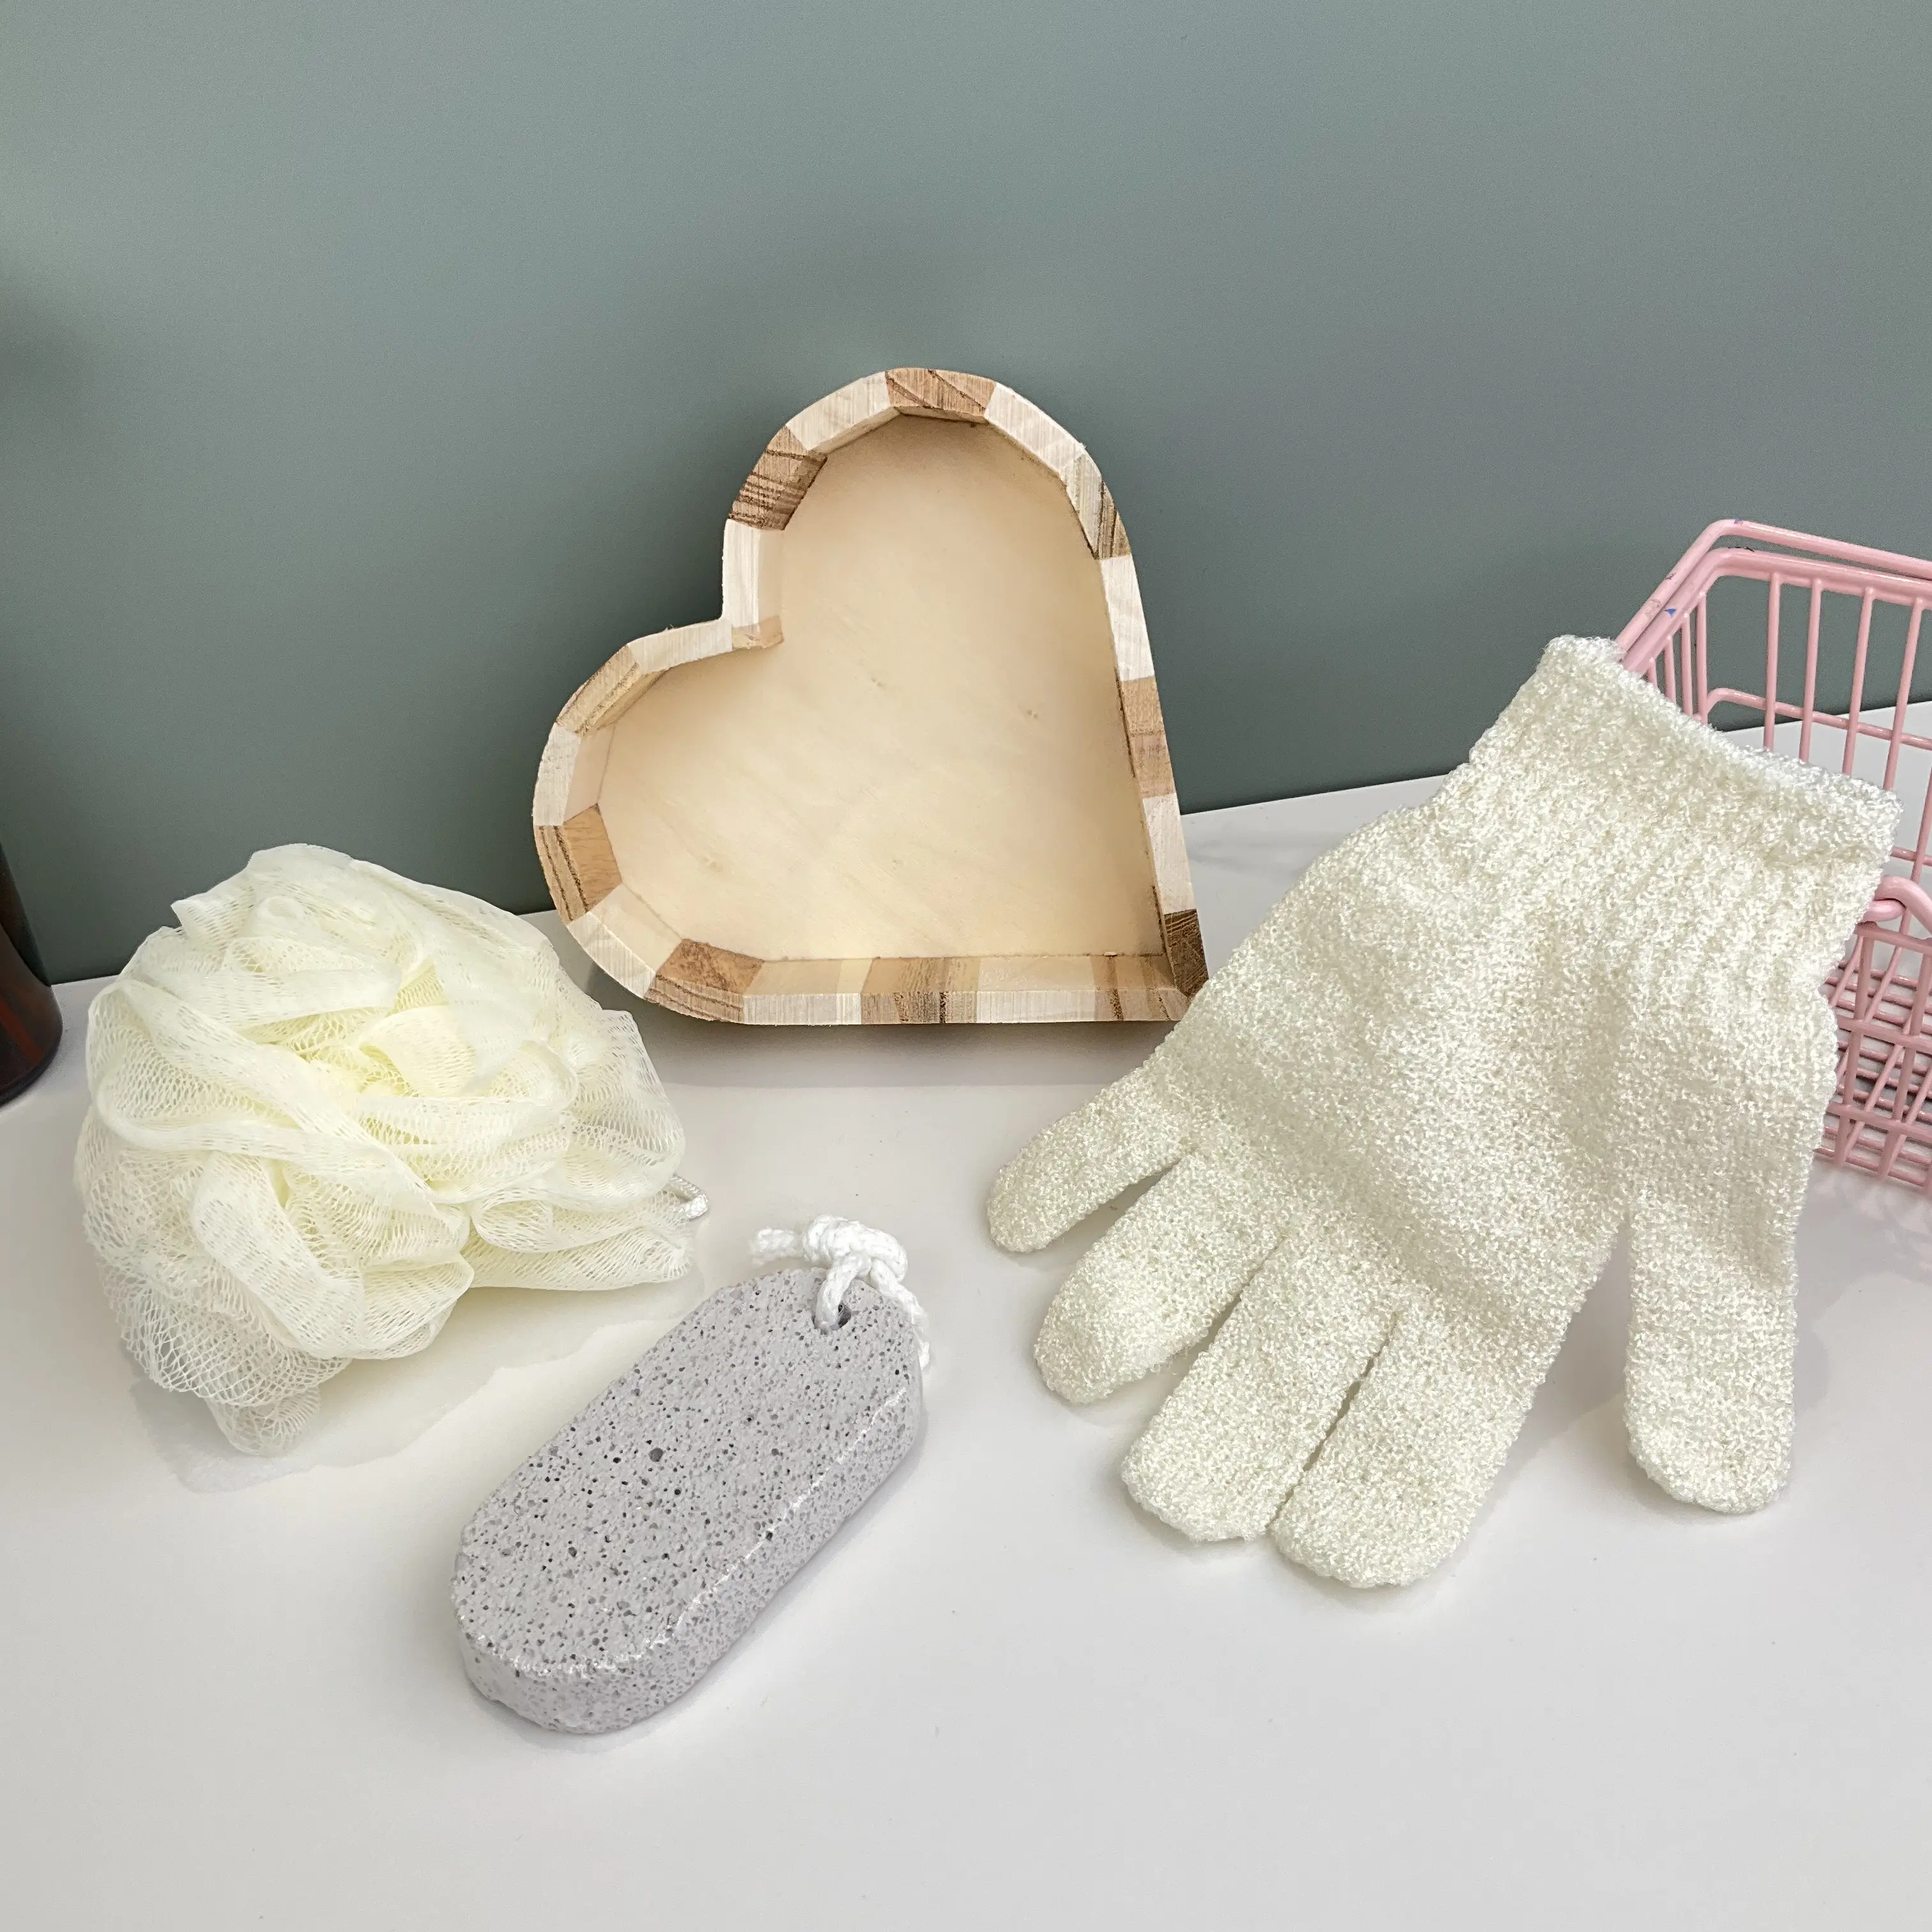 2024 Nice Design Wholesale Promotional 3PCS Heart Shape Wooden Spa Set Bath Body Accessories Gift Set Brush Sponge